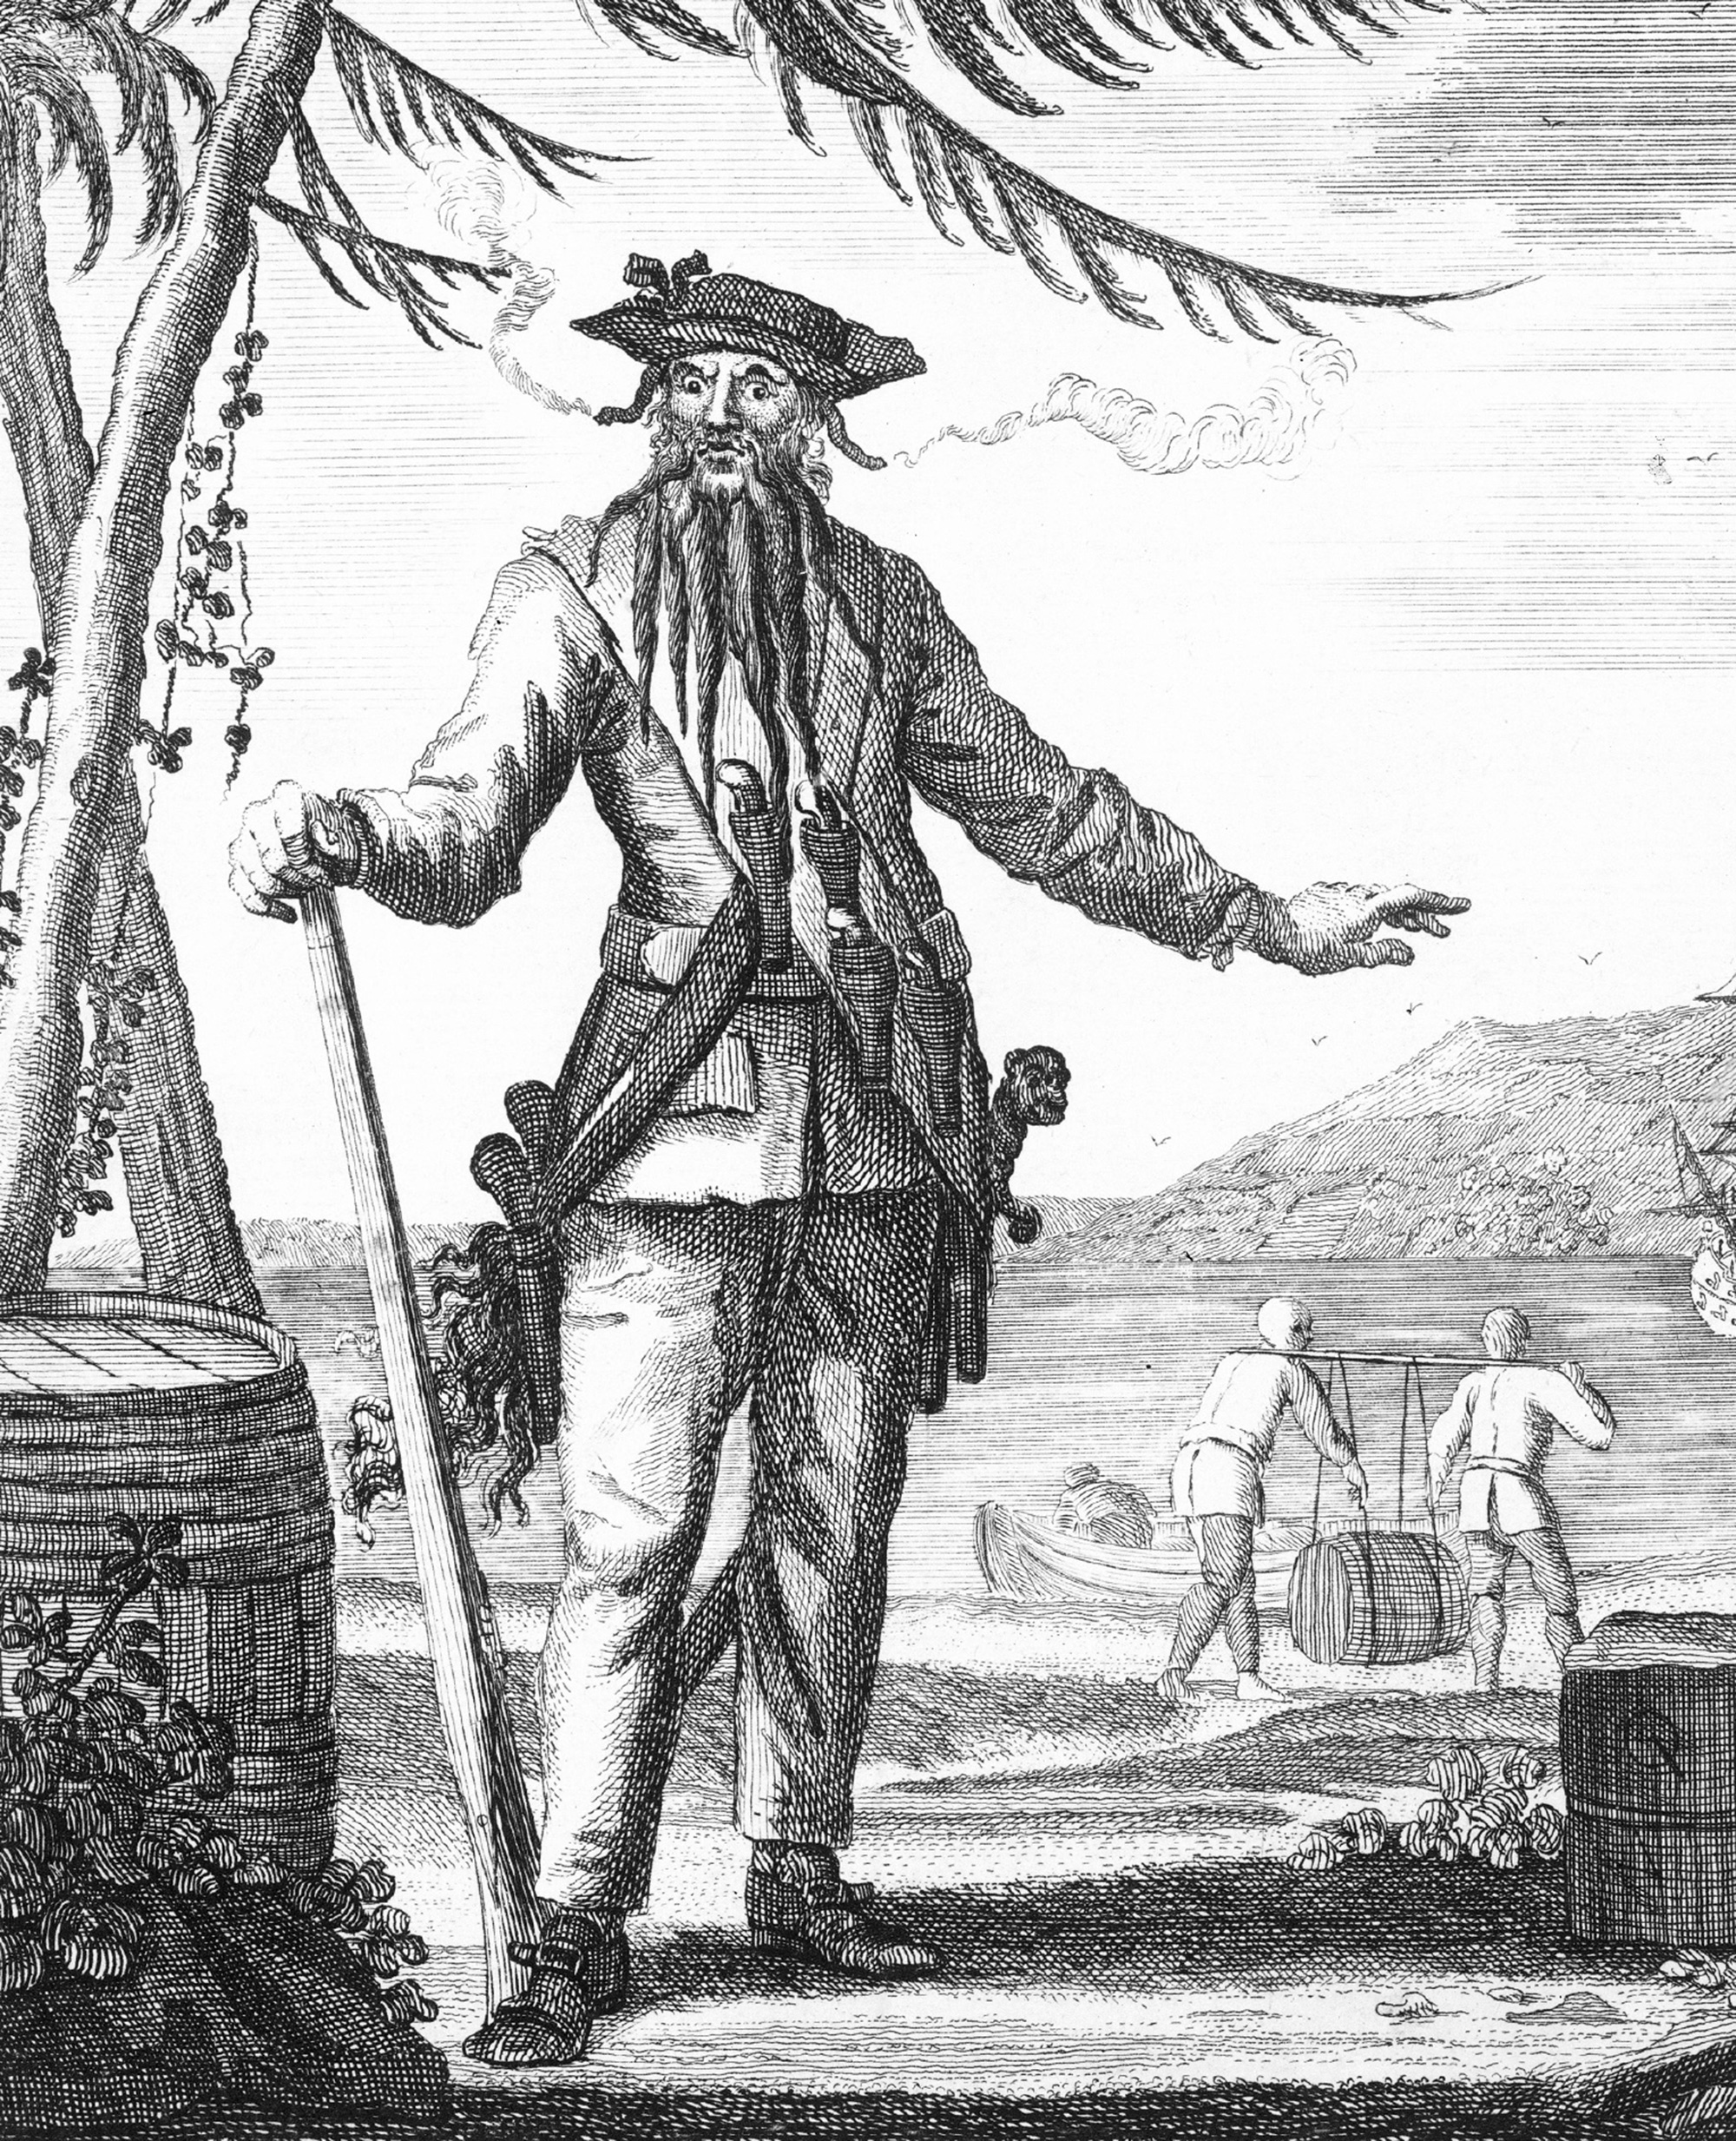 An illustration of Blackbeard, the famed English pirate. 